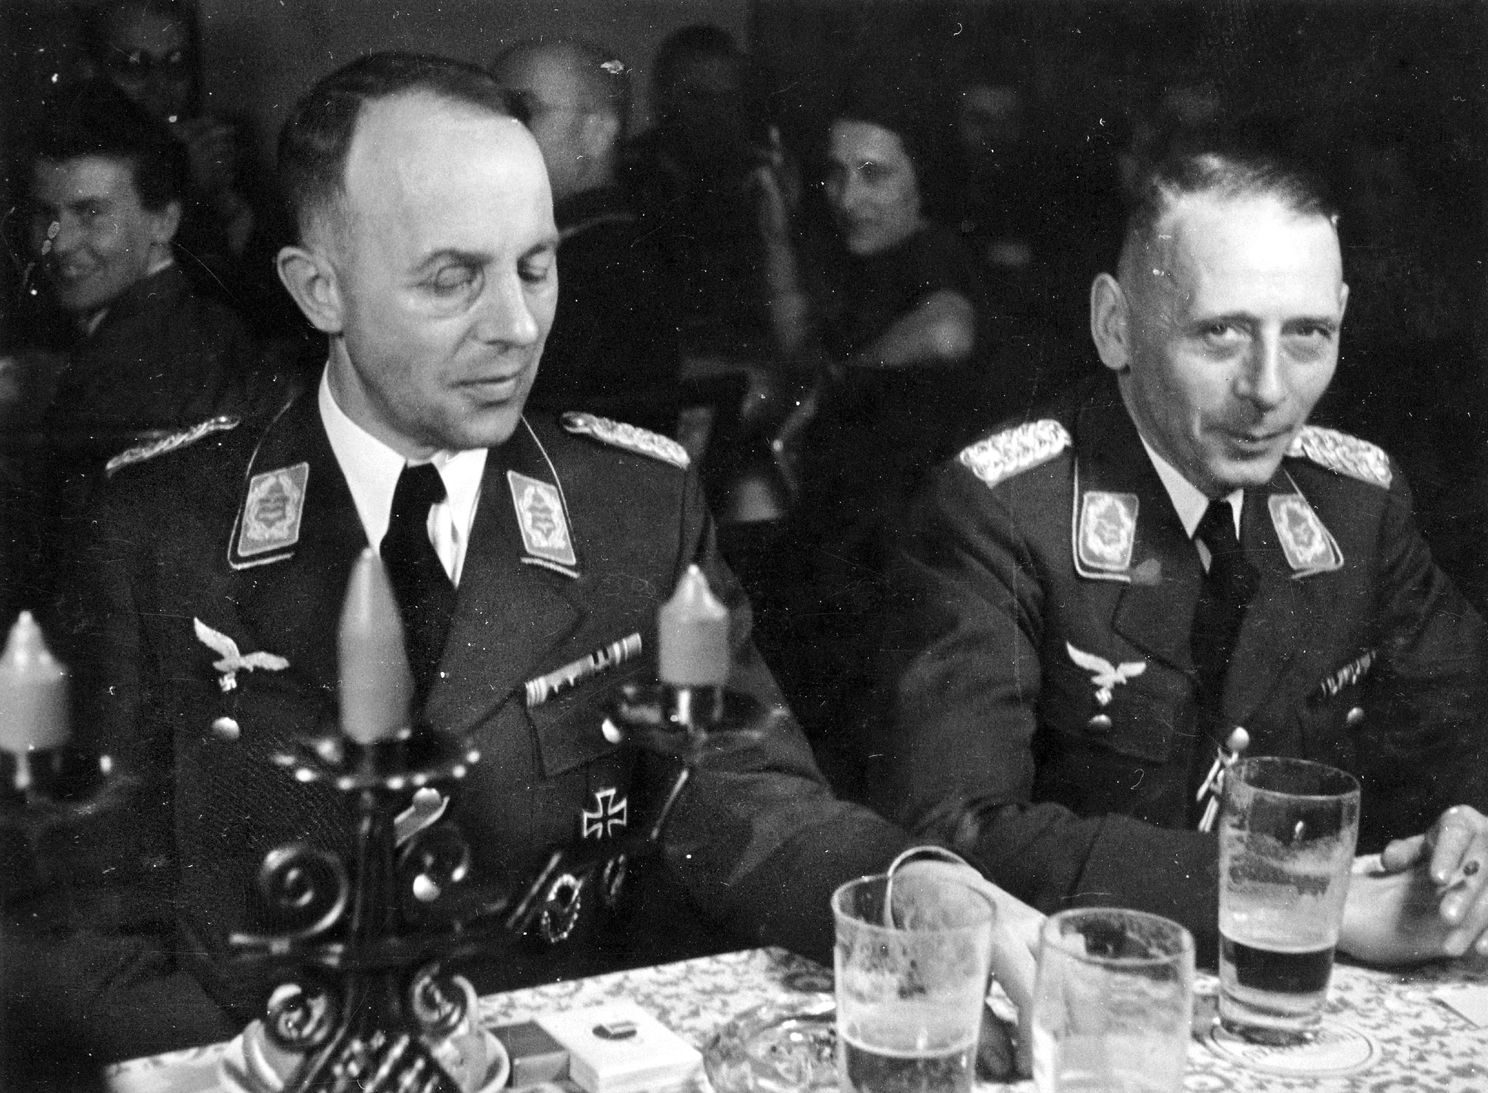 Сс и сд. Хьюго босс униформа СС. Хьюго-босс черная форма СС. Allgemeine SS барикадируются. A man sitting in Black SS uniform.